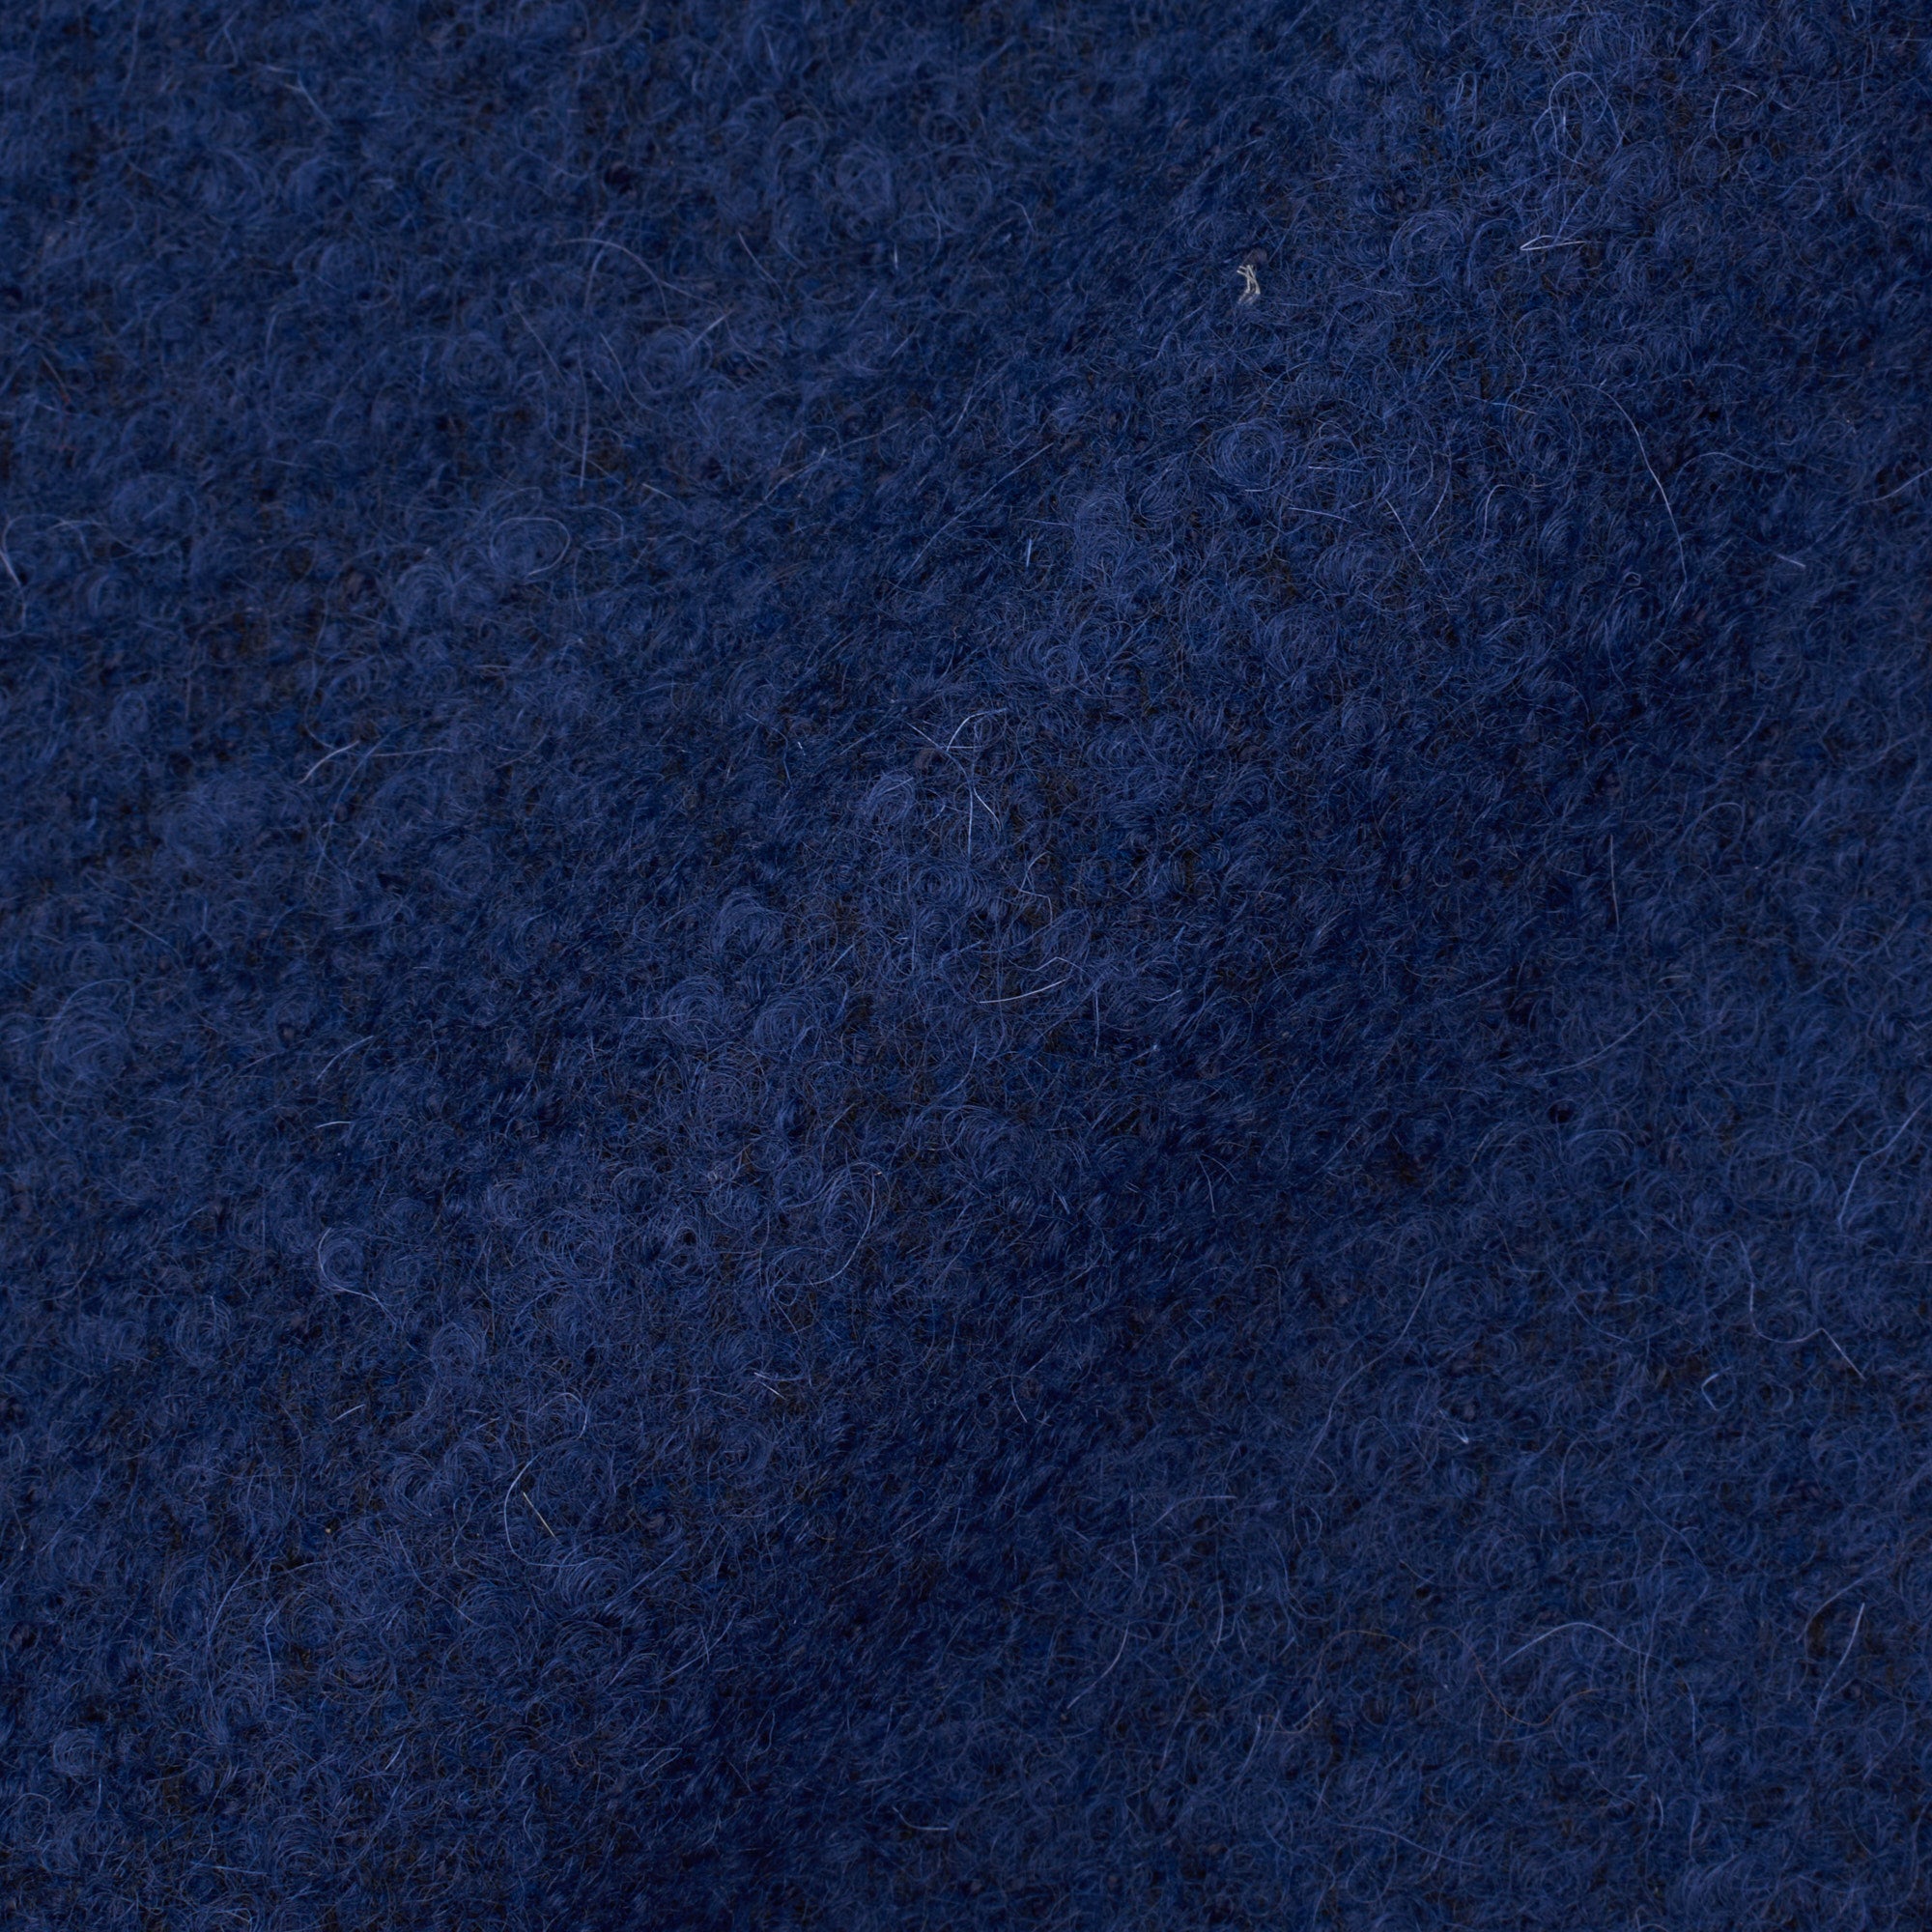 Sartoria CHIAIA Napoli Handmade Bespoke Navy Blue Wool Tweed Coat EU 52 NEW US 42